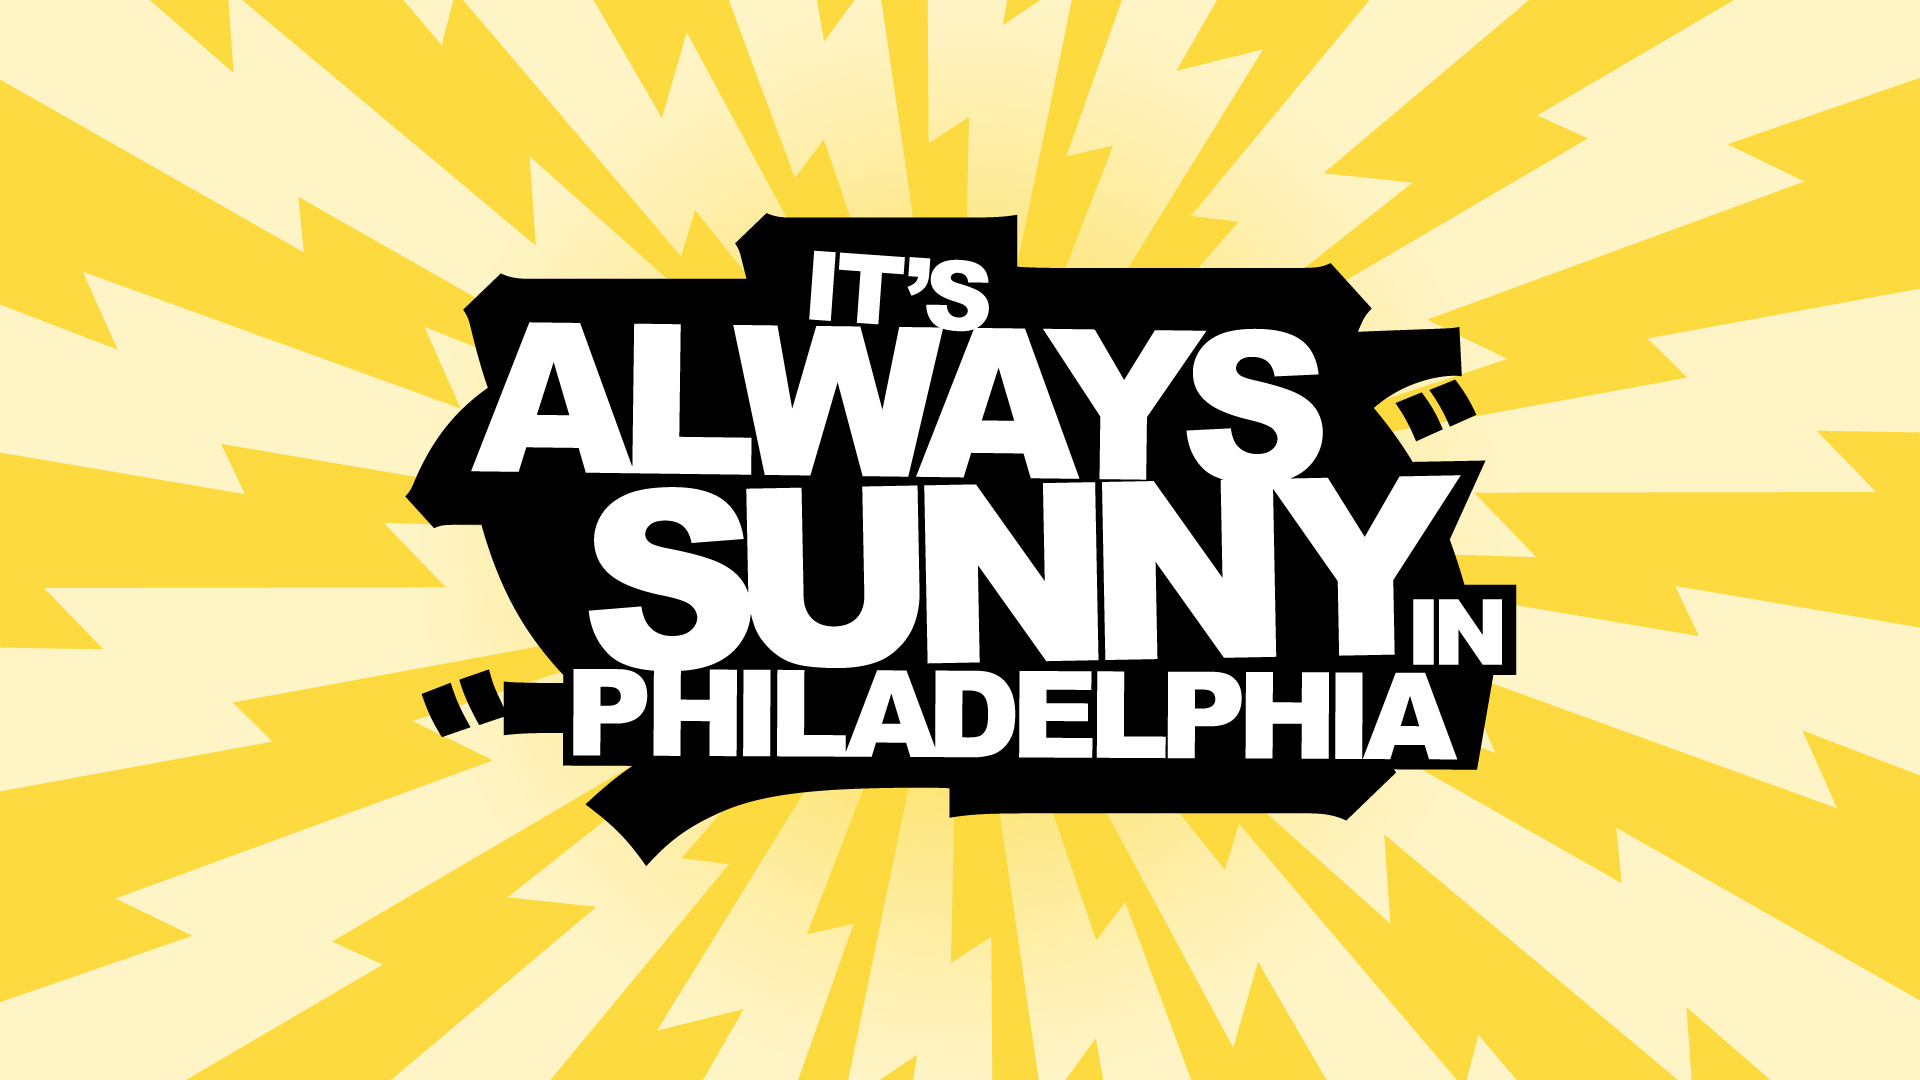 its_always_sunny_in_philadelphia_boards_02.jpg